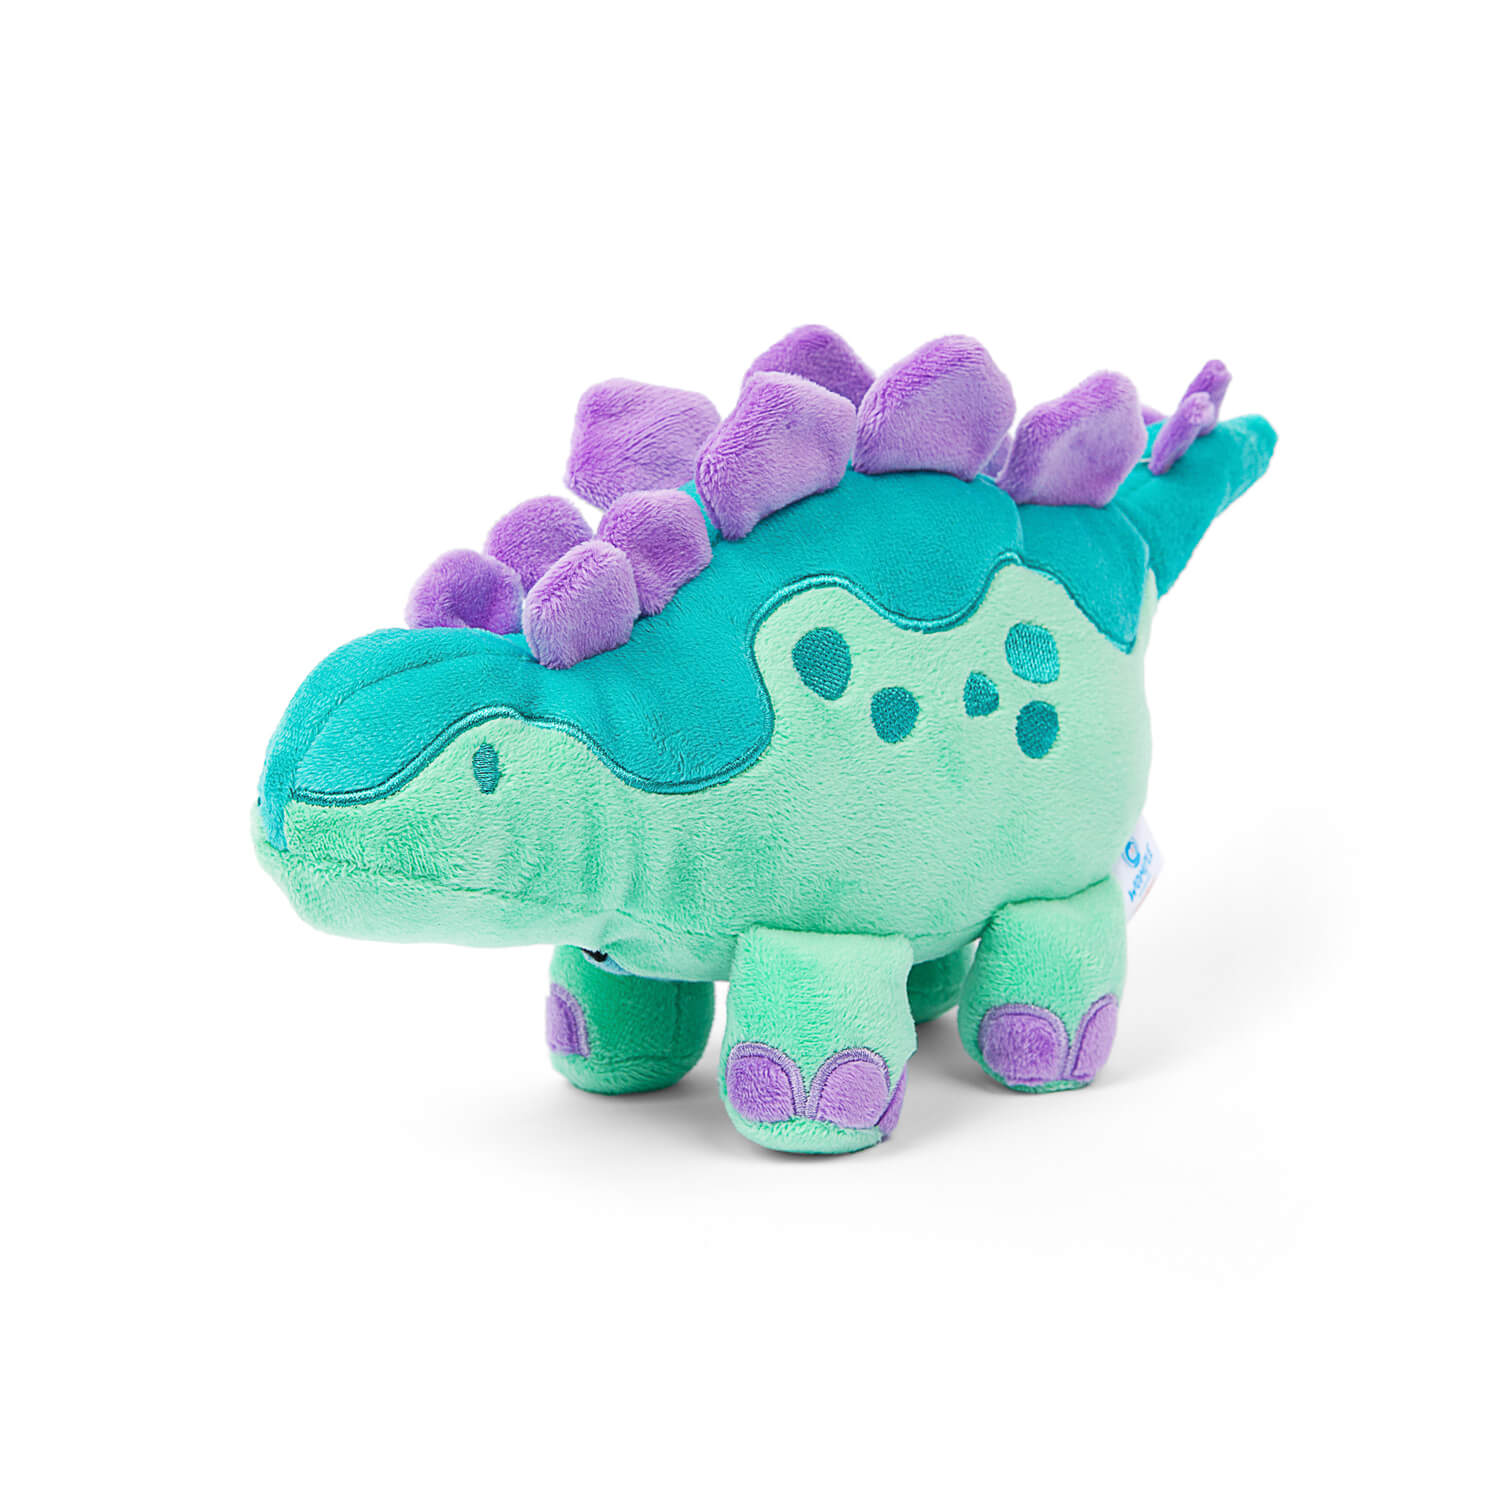 Plush toy of dinosaur